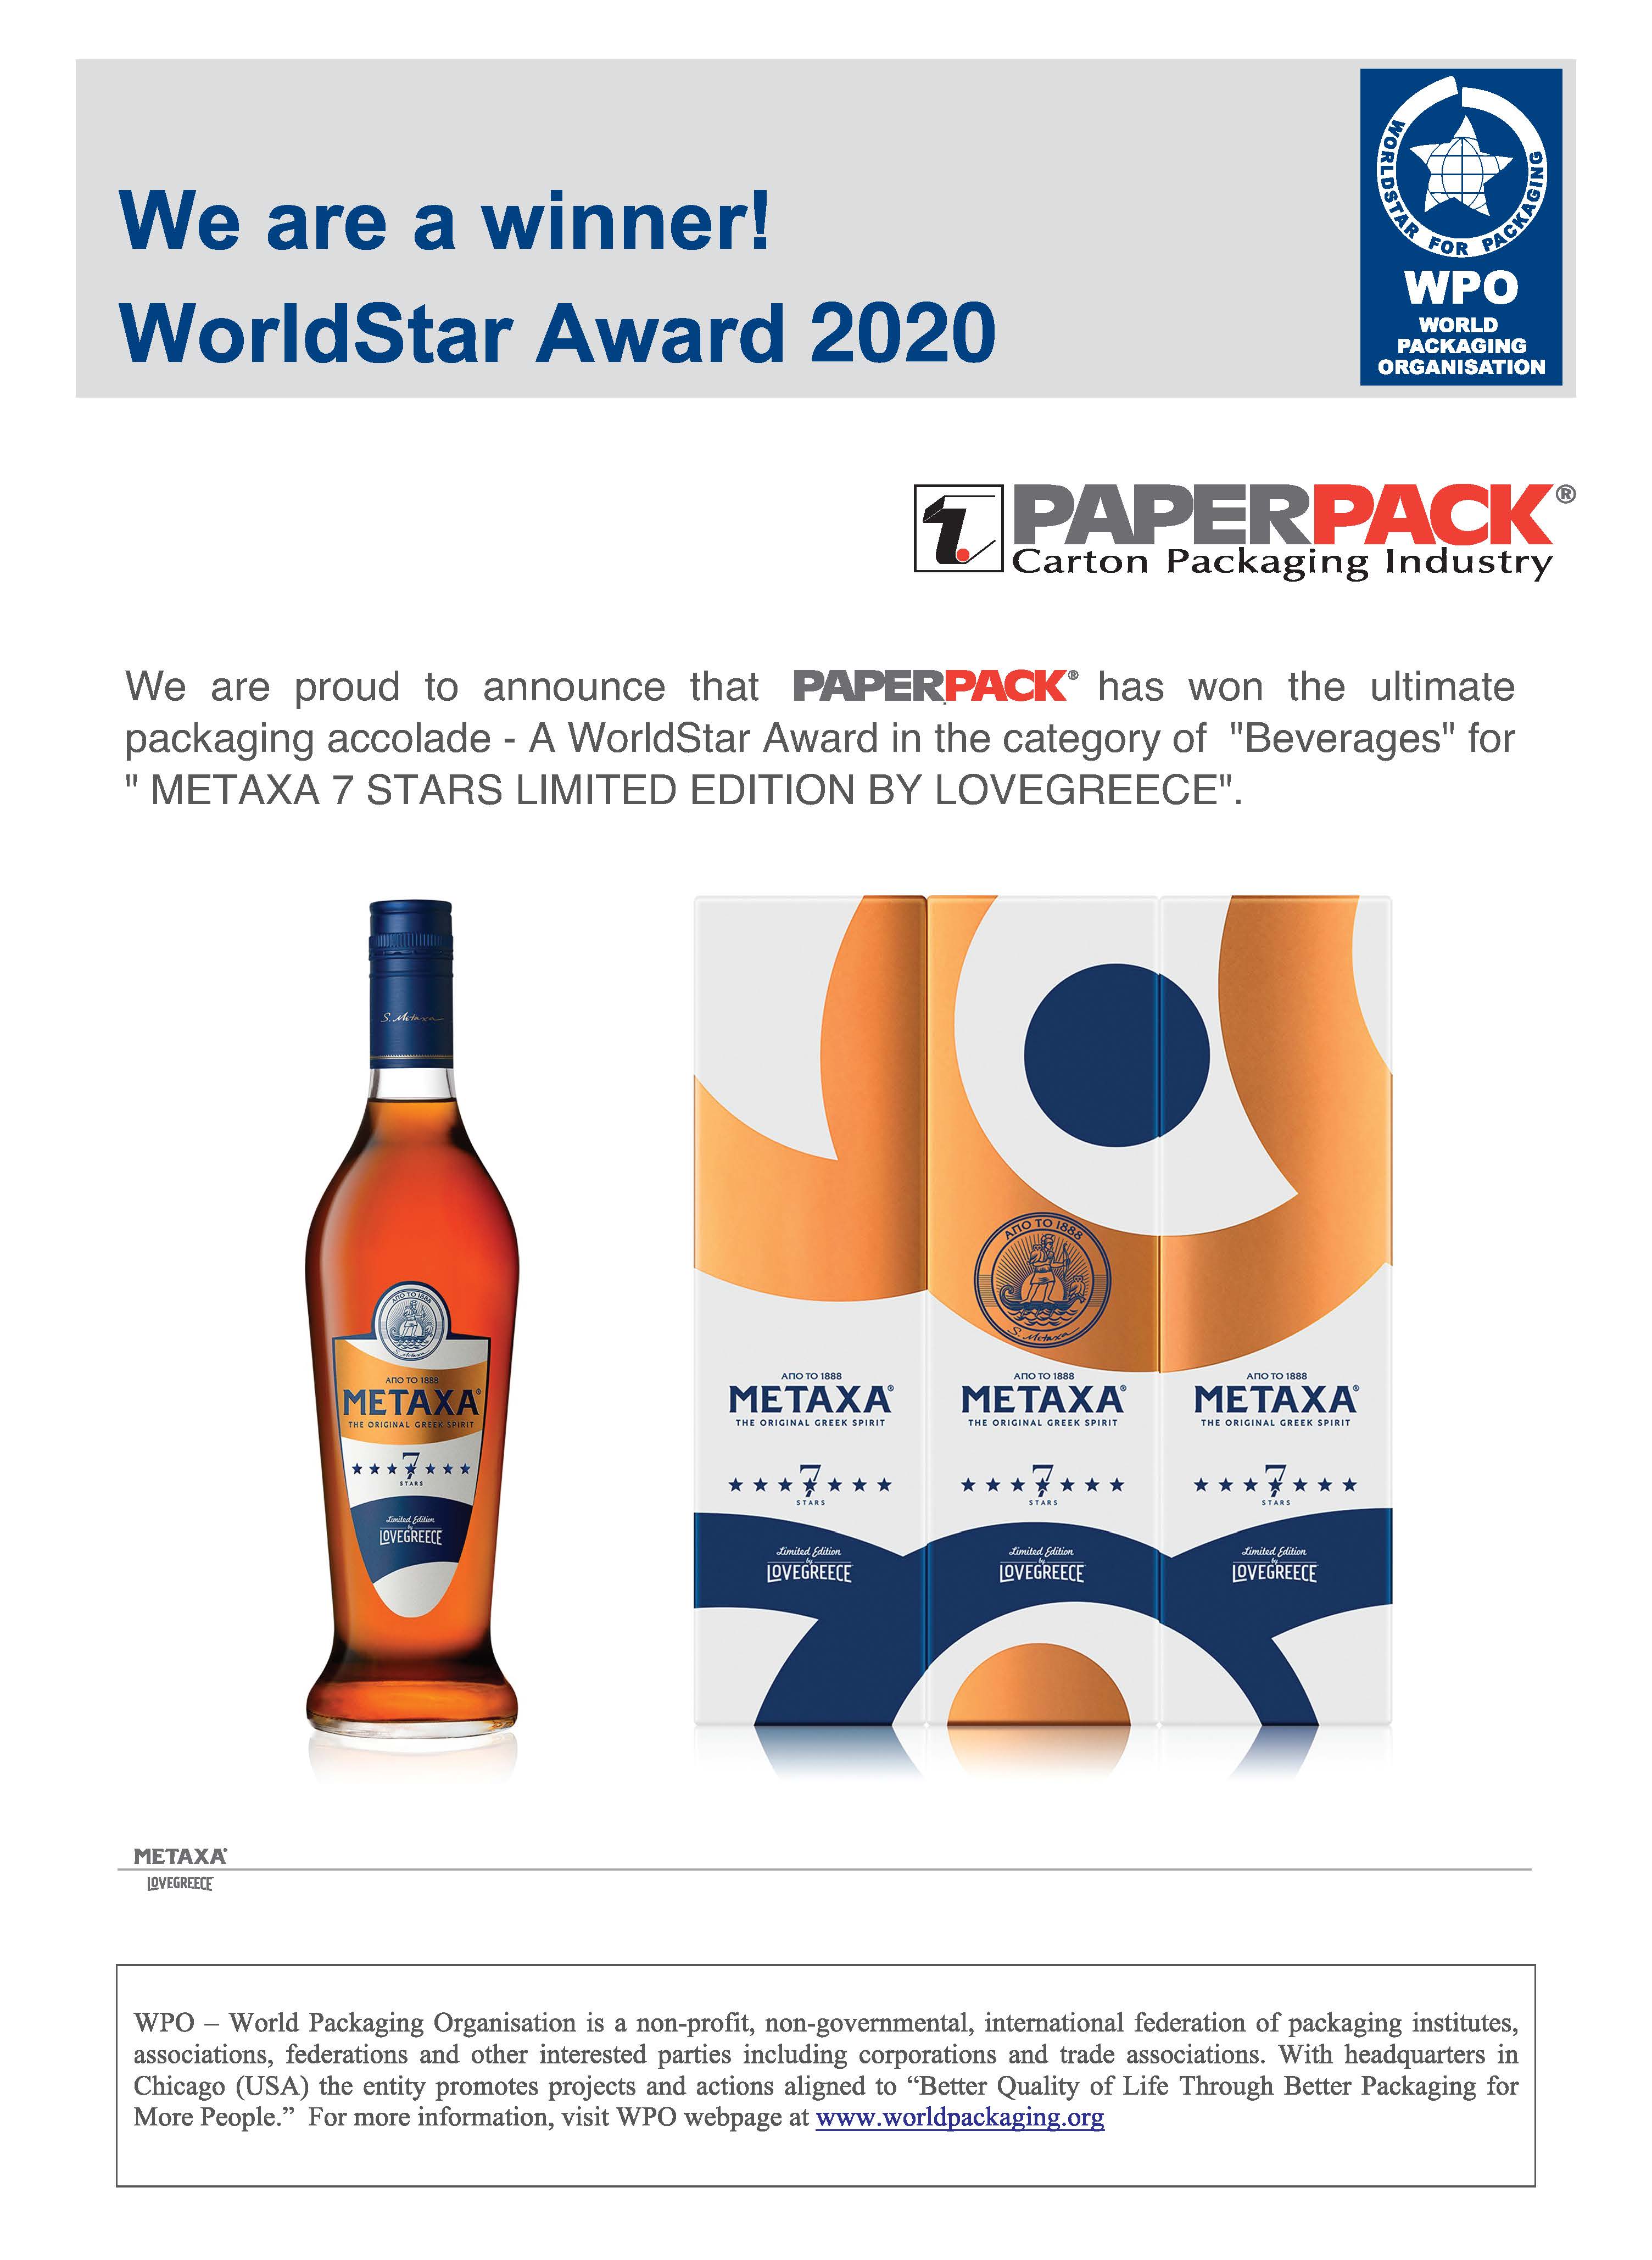 World Star Packaging Awards 2020